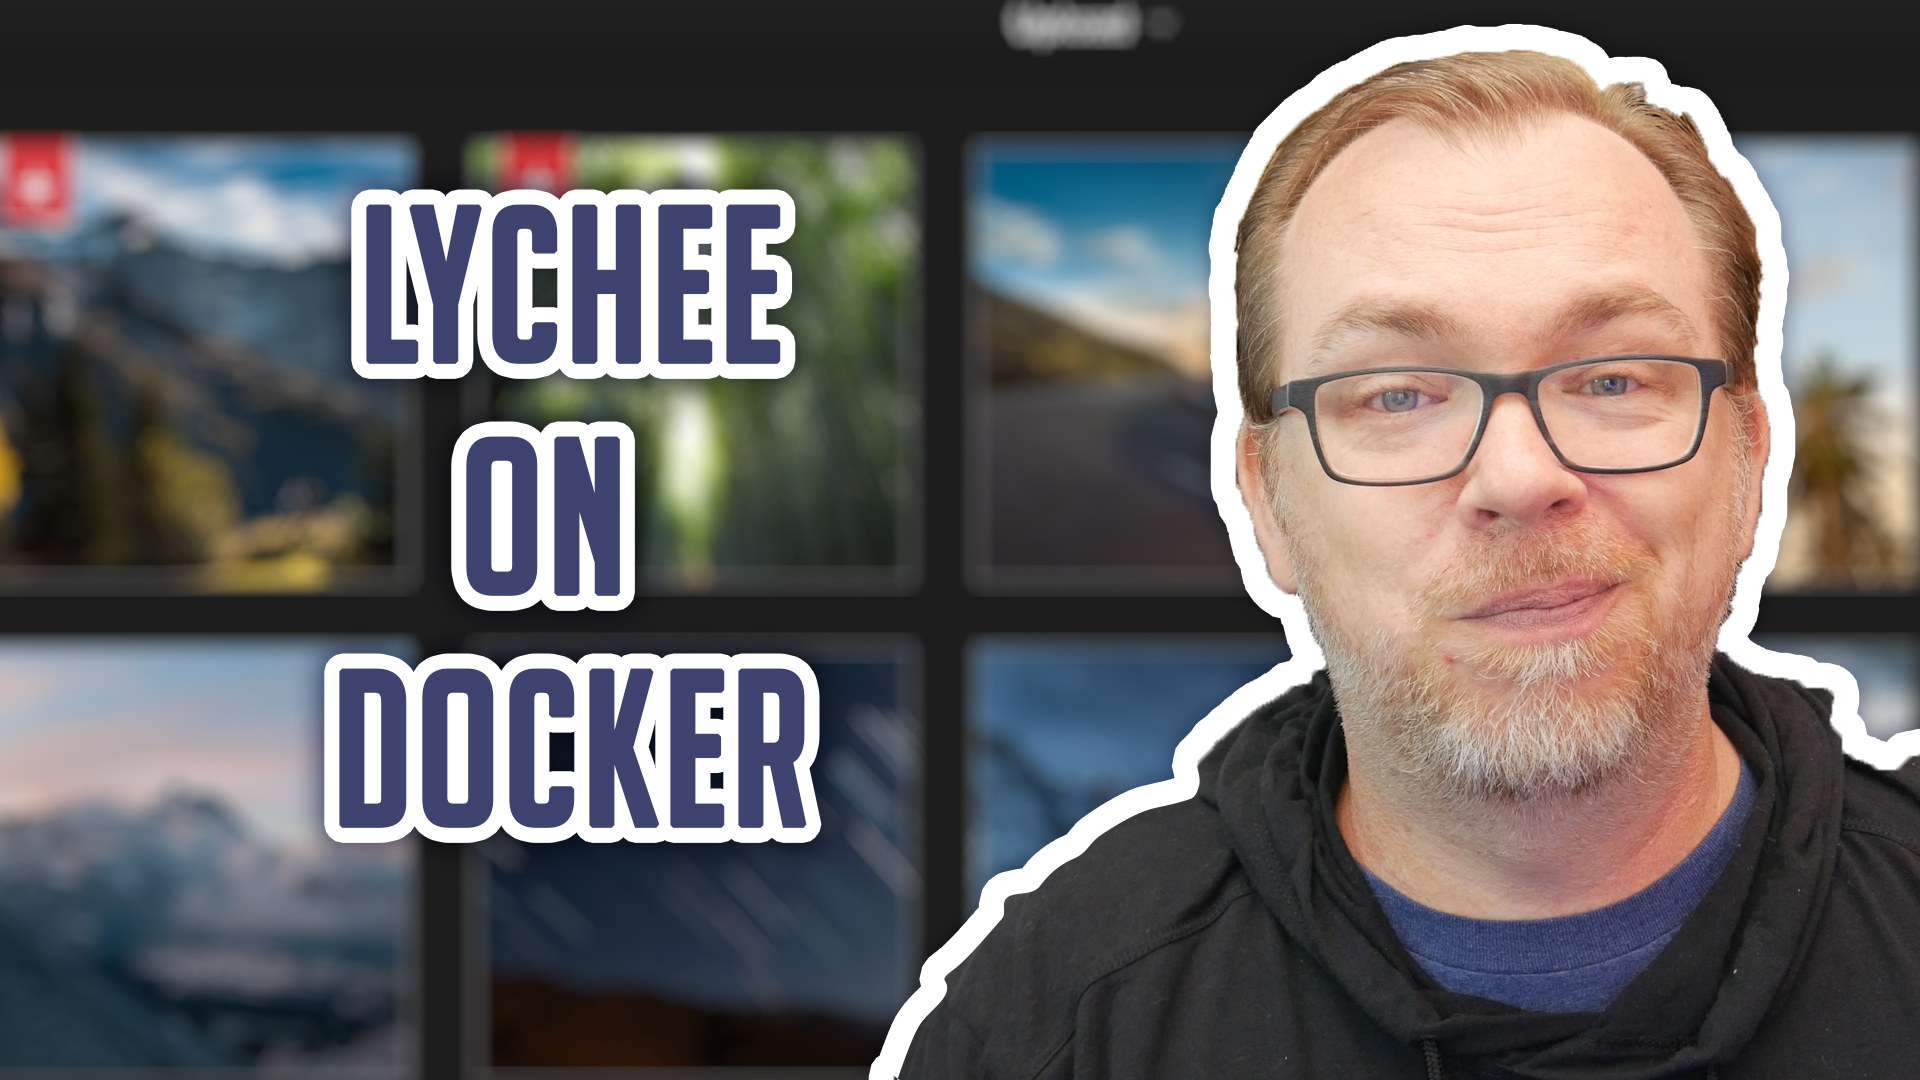 Lychee Installed On Docker